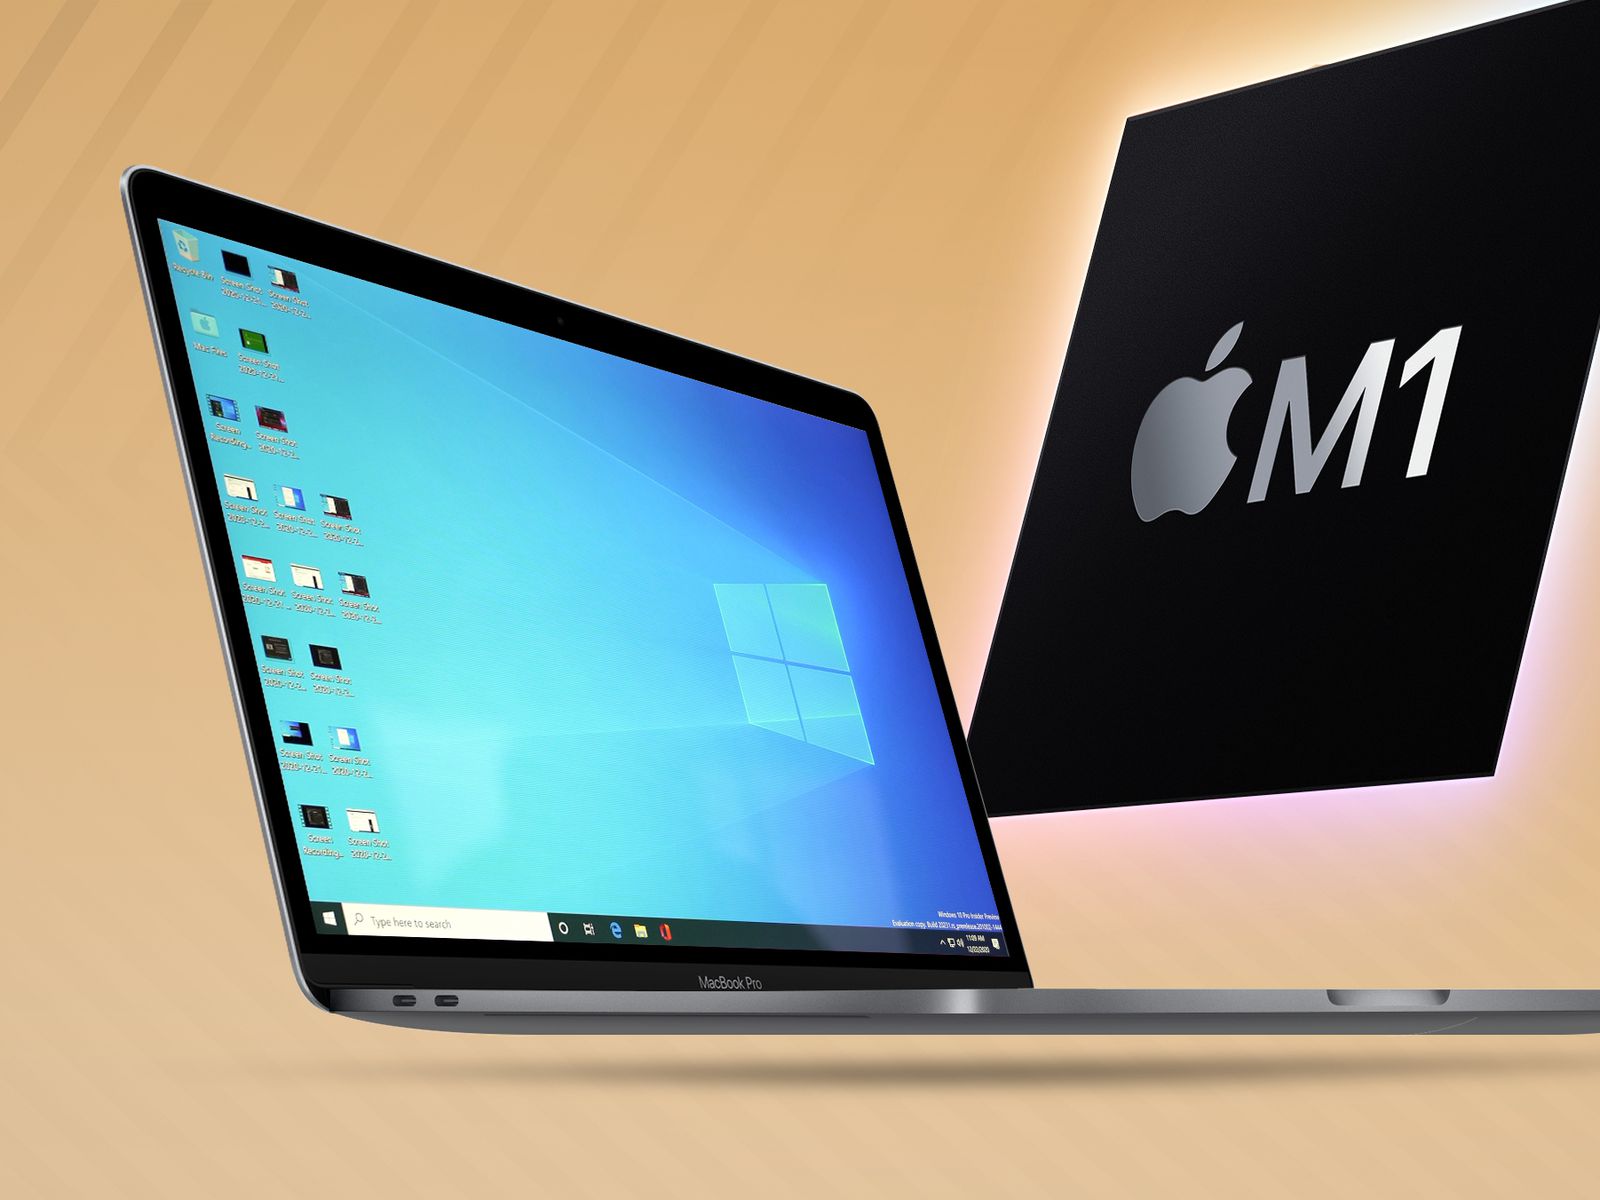 parallels desktop 16 for mac m1